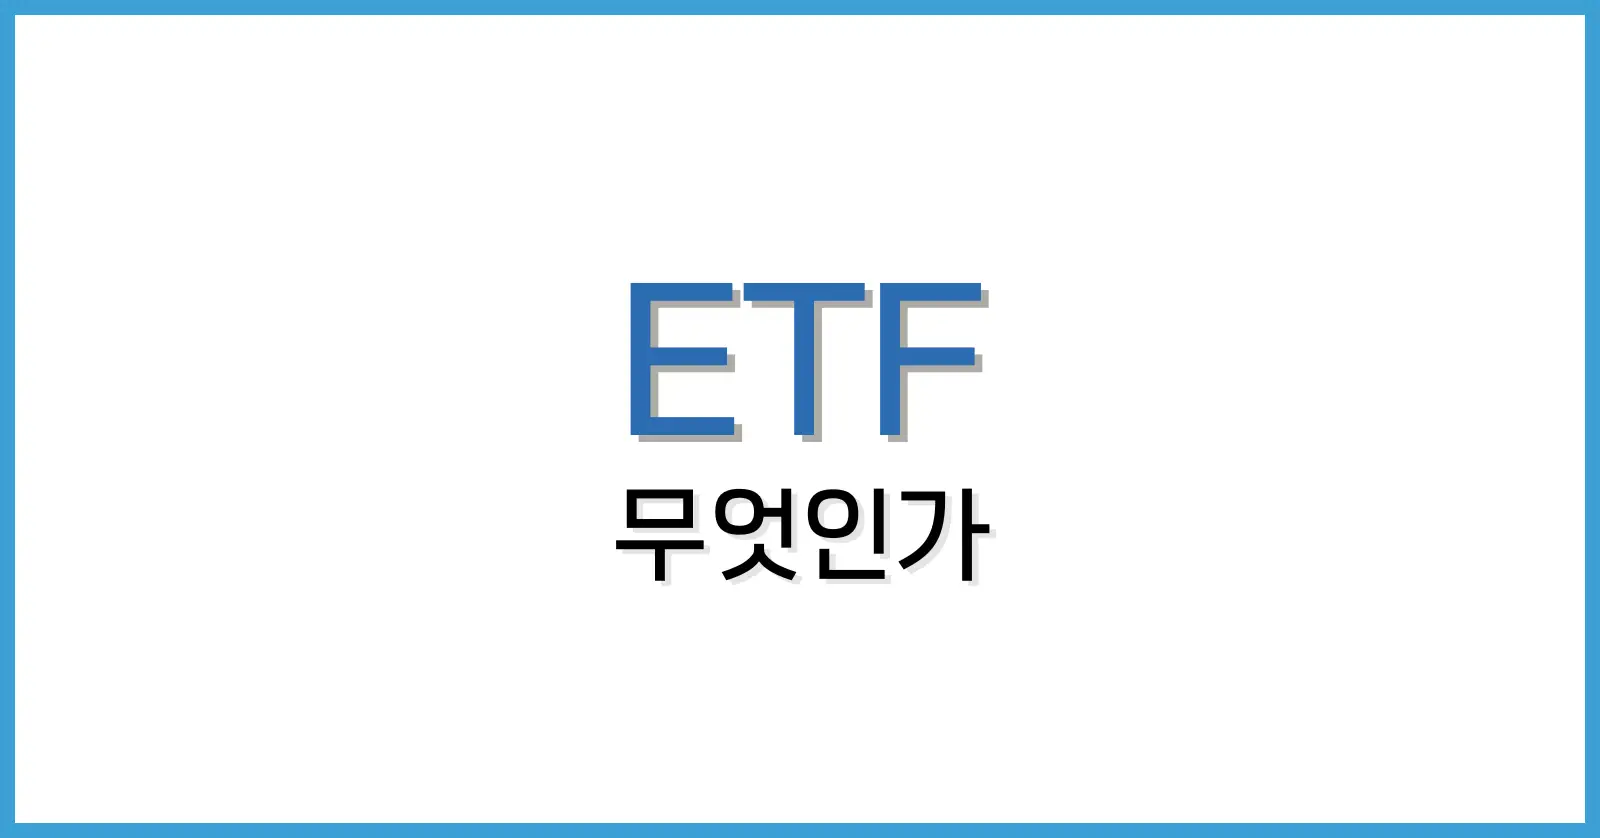 ETF란무엇인가